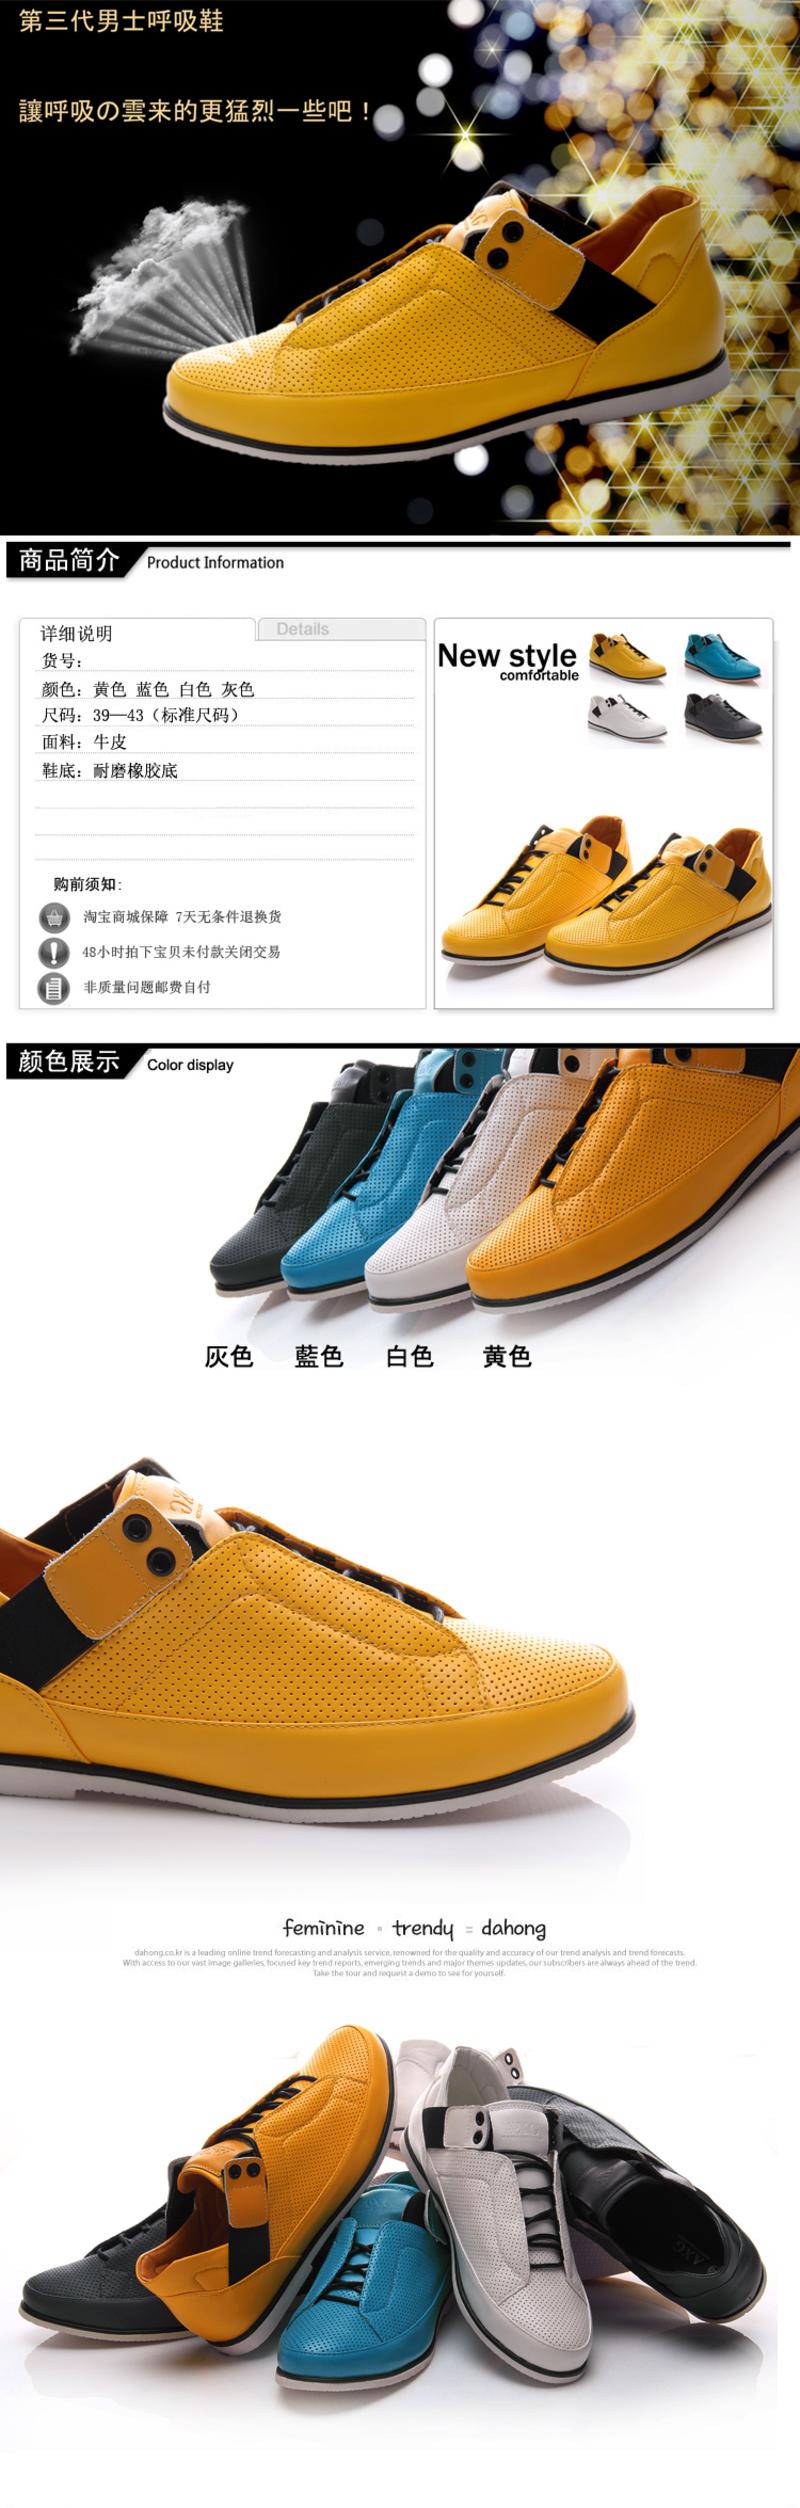 MR.benyou新款韩版男鞋休闲鞋日常休闲时尚潮流透气板鞋 308鞋-B20-P60